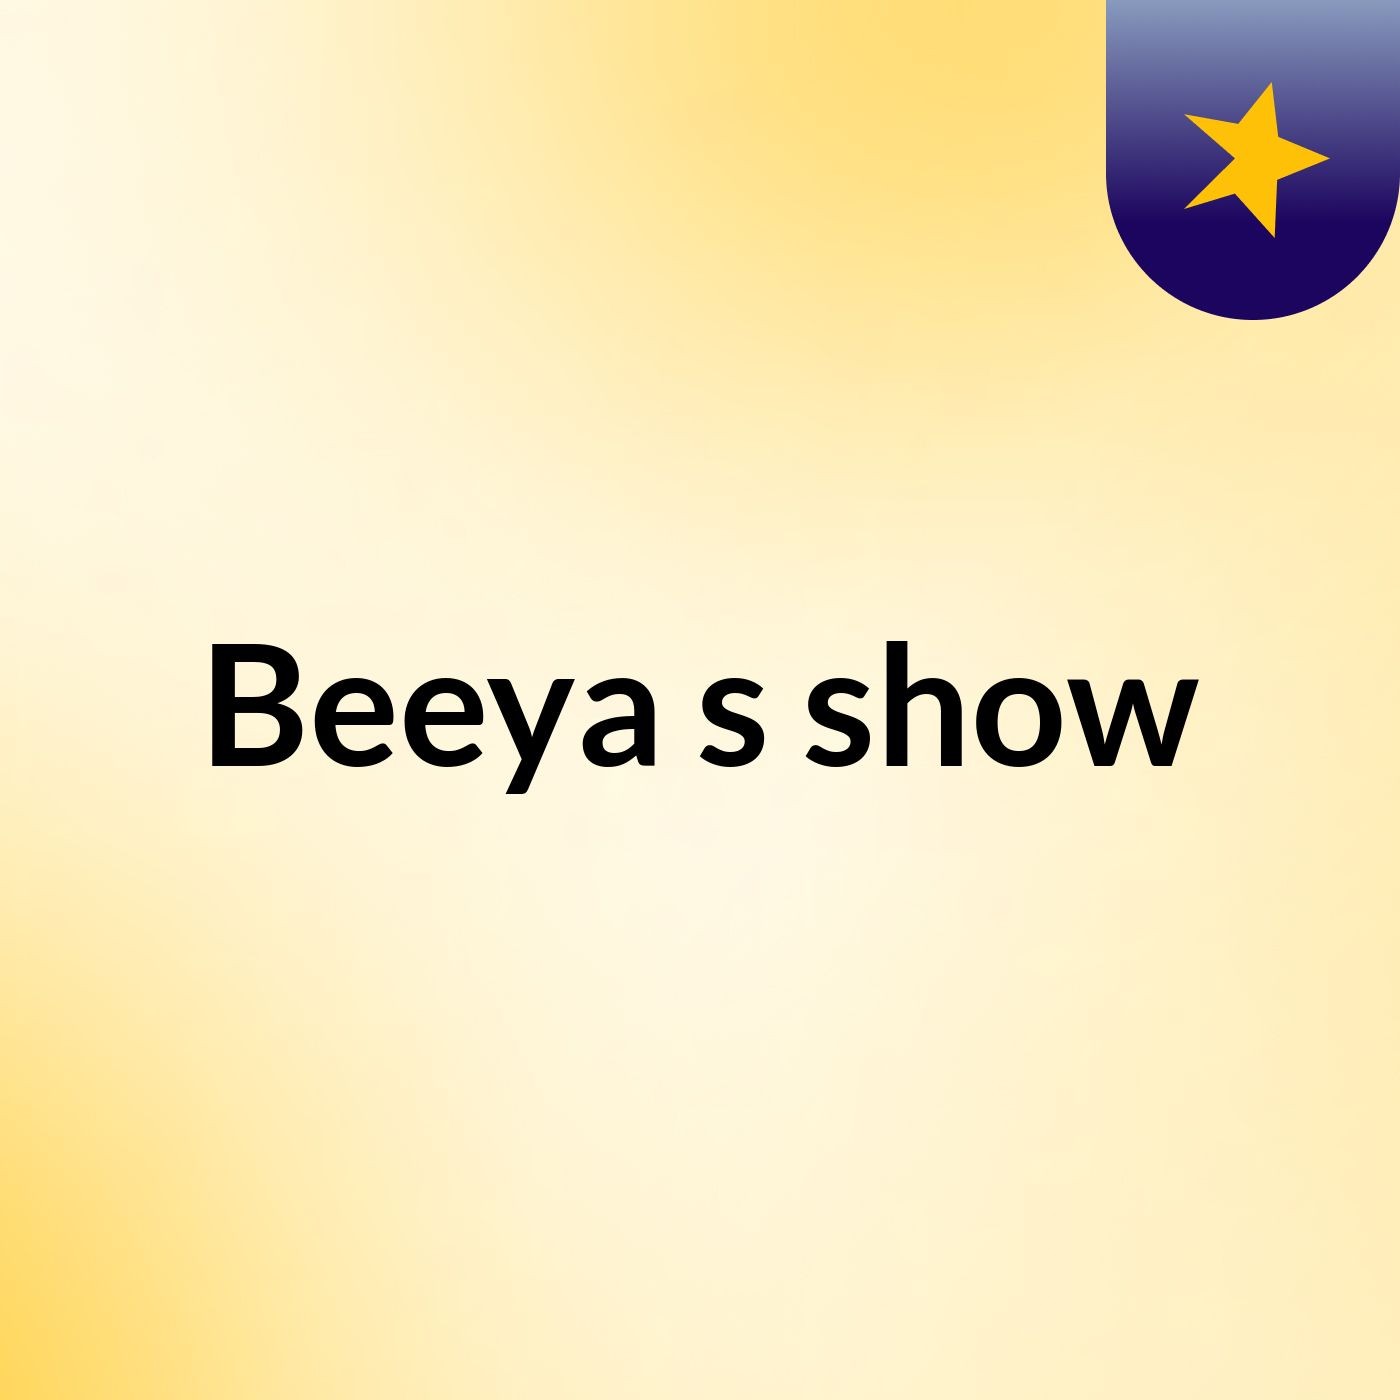 Beeya's show